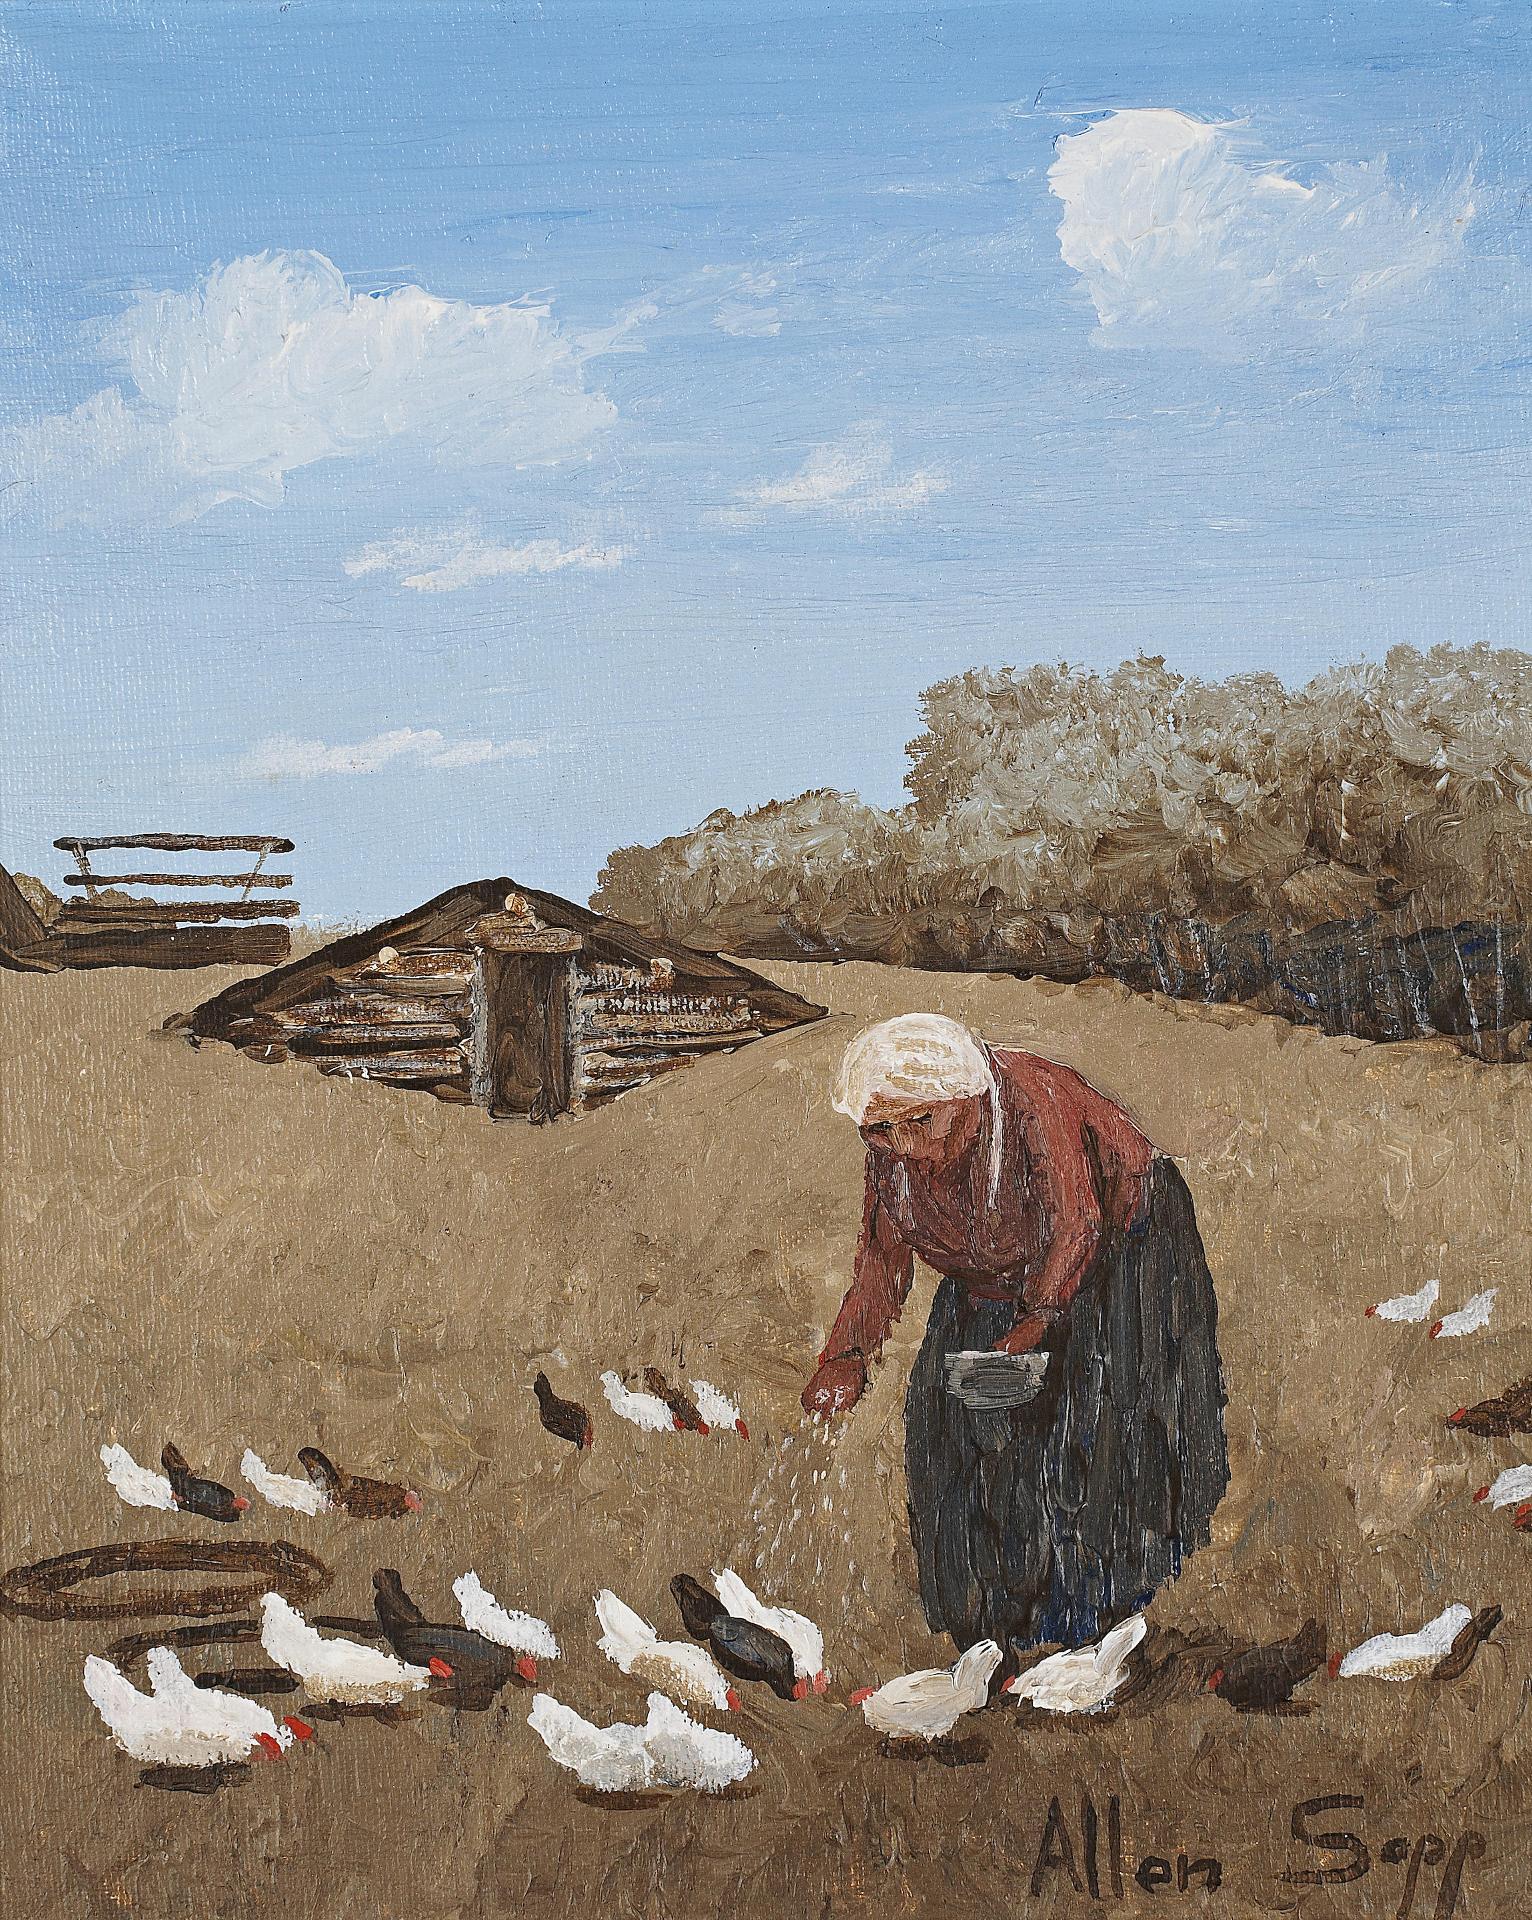 Allen Fredrick Sapp (1929-2015) - My Grandmother's Got Lots of Chickens